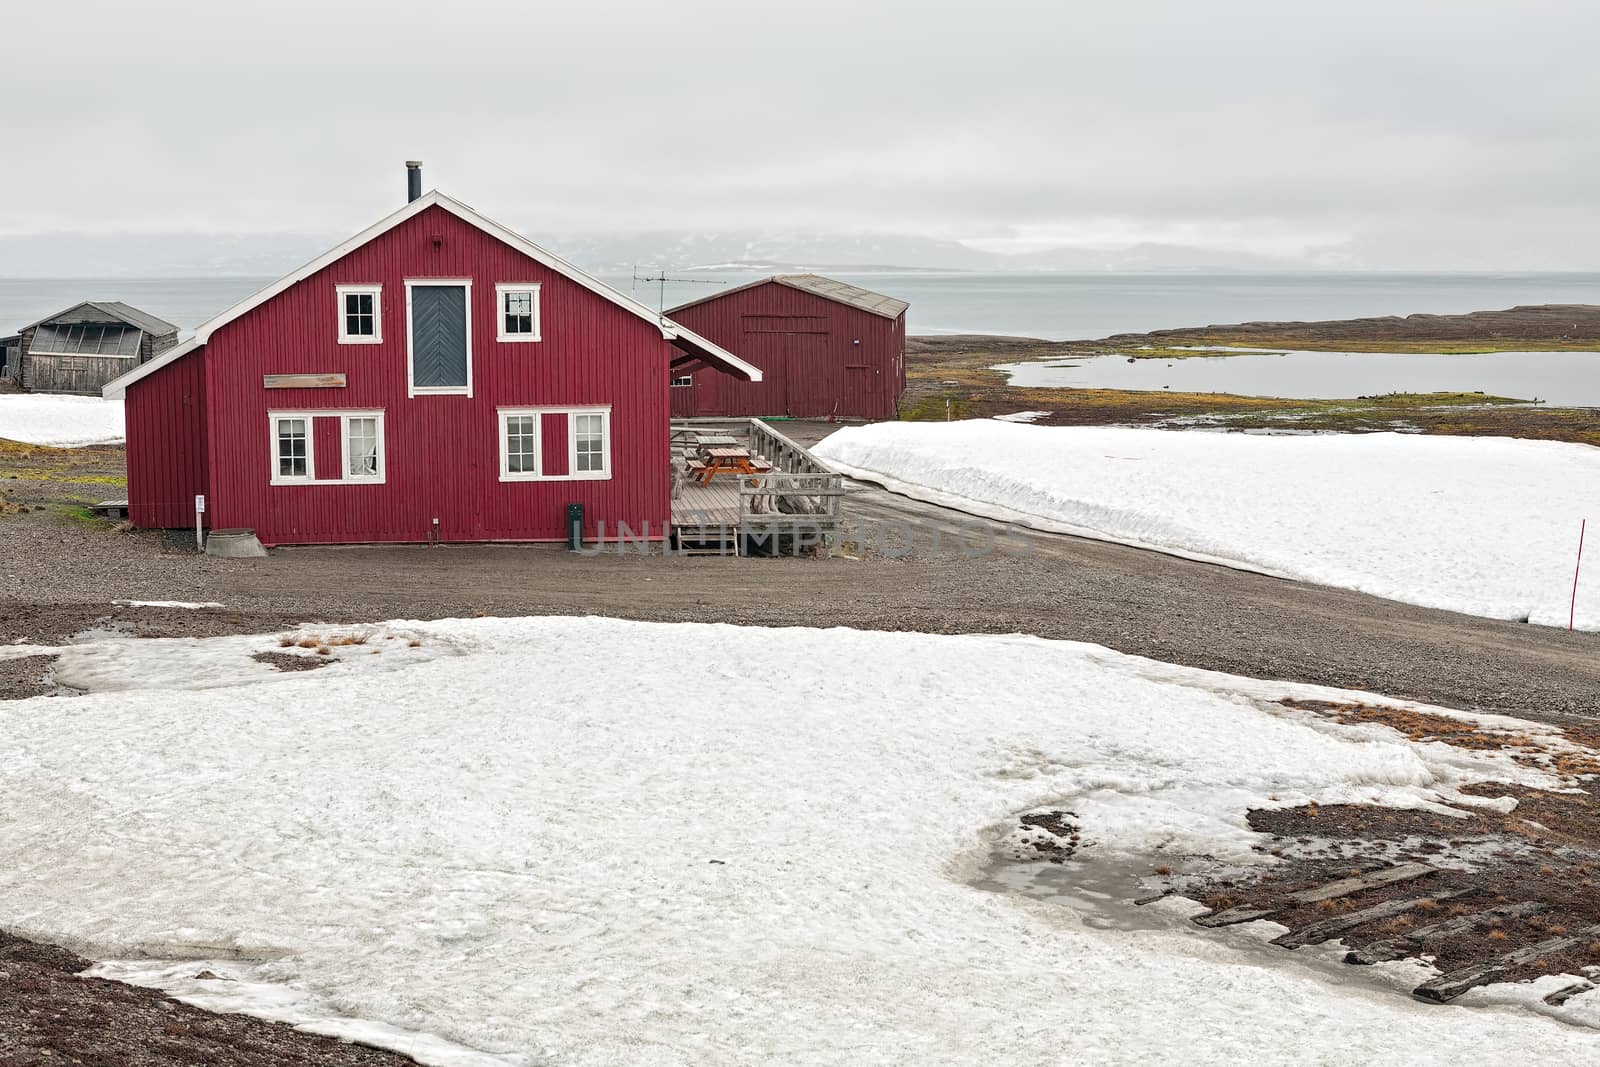 Wooden houses in Ny Alesund, Svalbard islands by LuigiMorbidelli